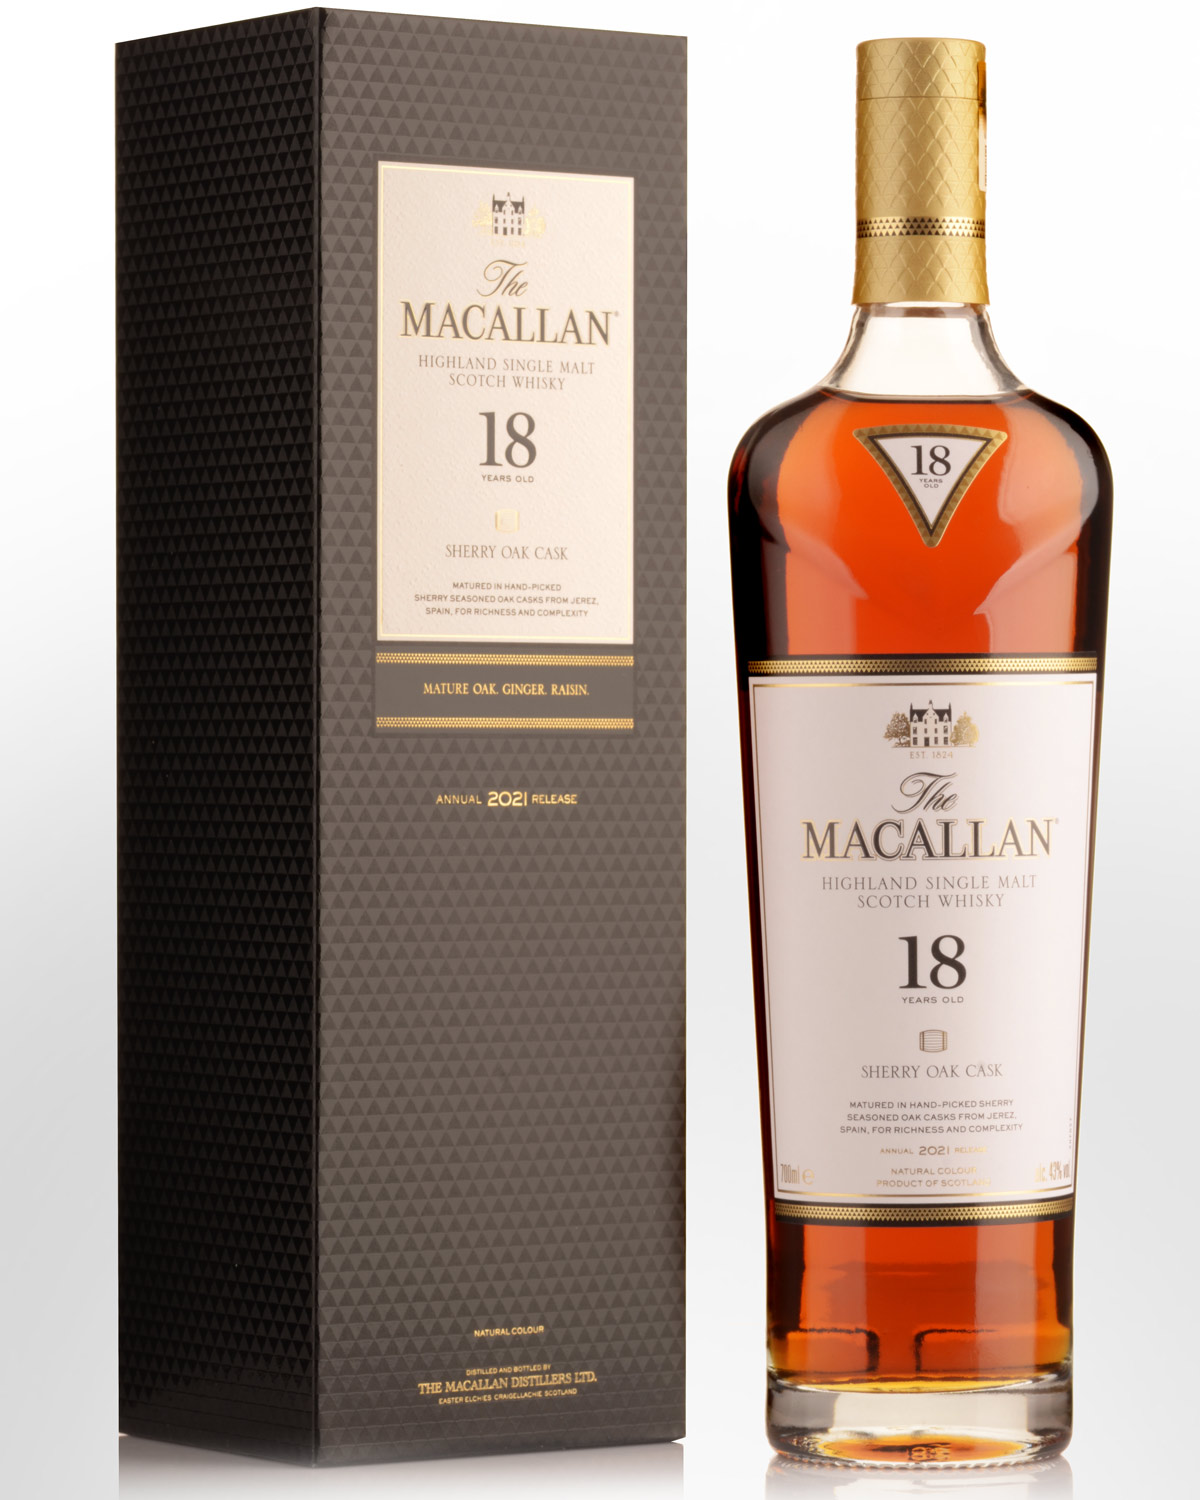 The Macallan Sherry Oak Cask 18 Year Old Single Malt Scotch Whisky